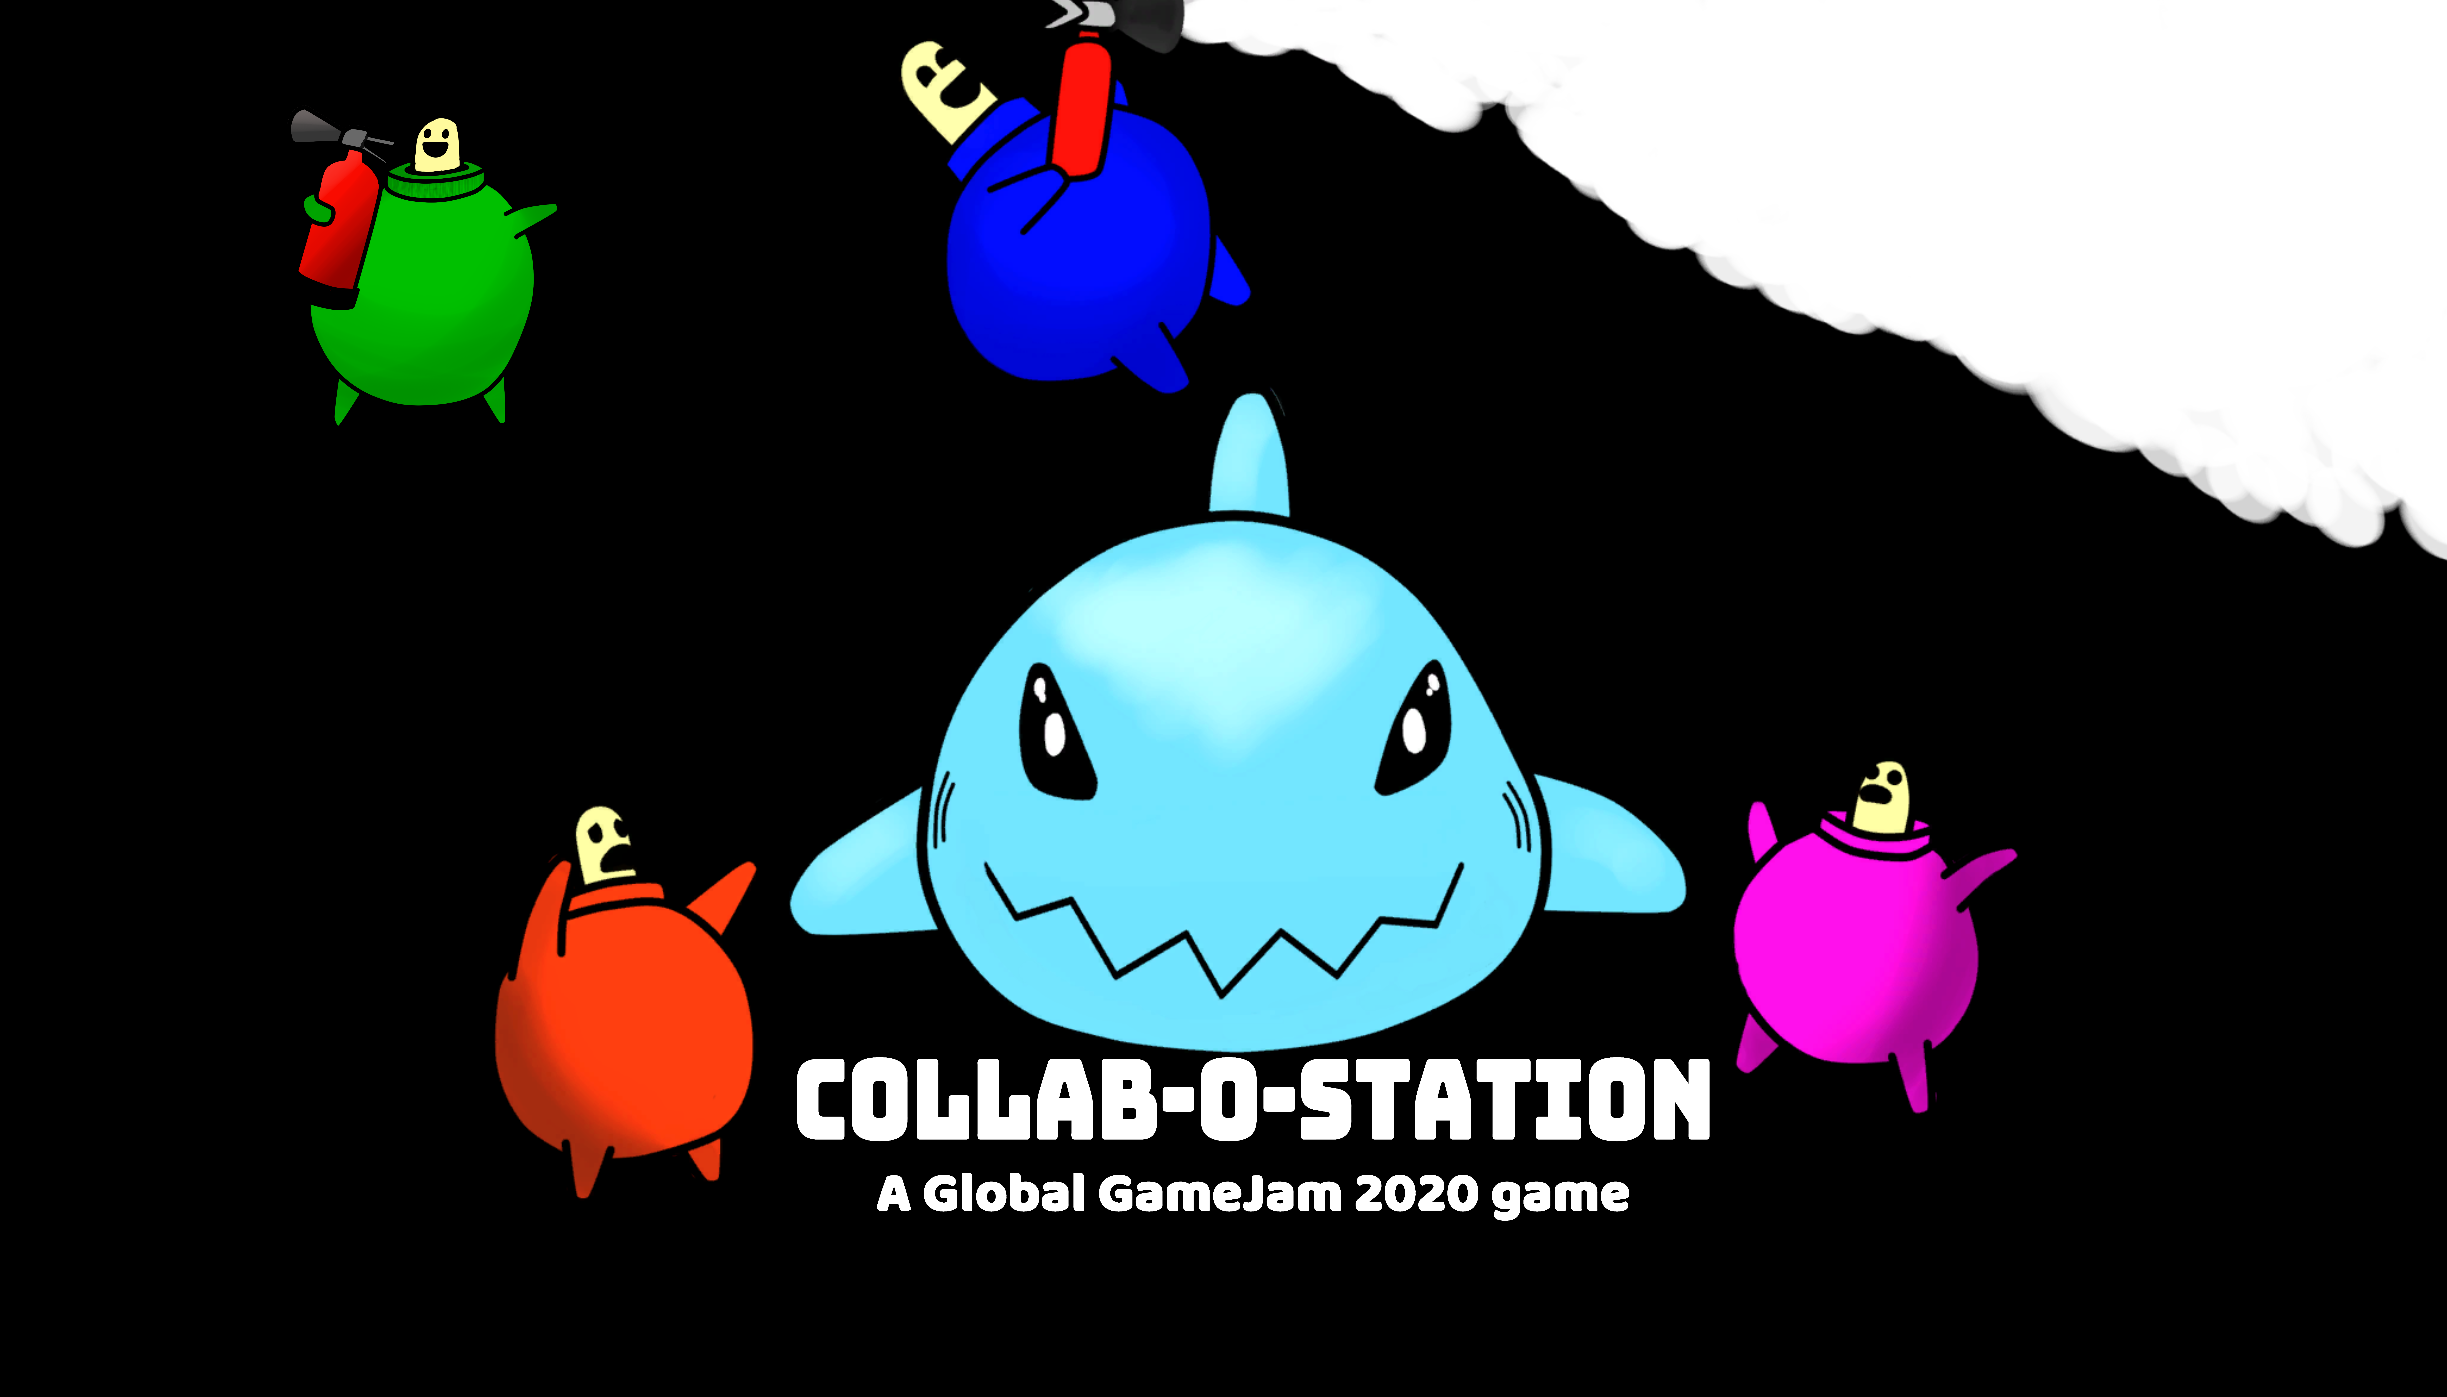 Collab-O-Station